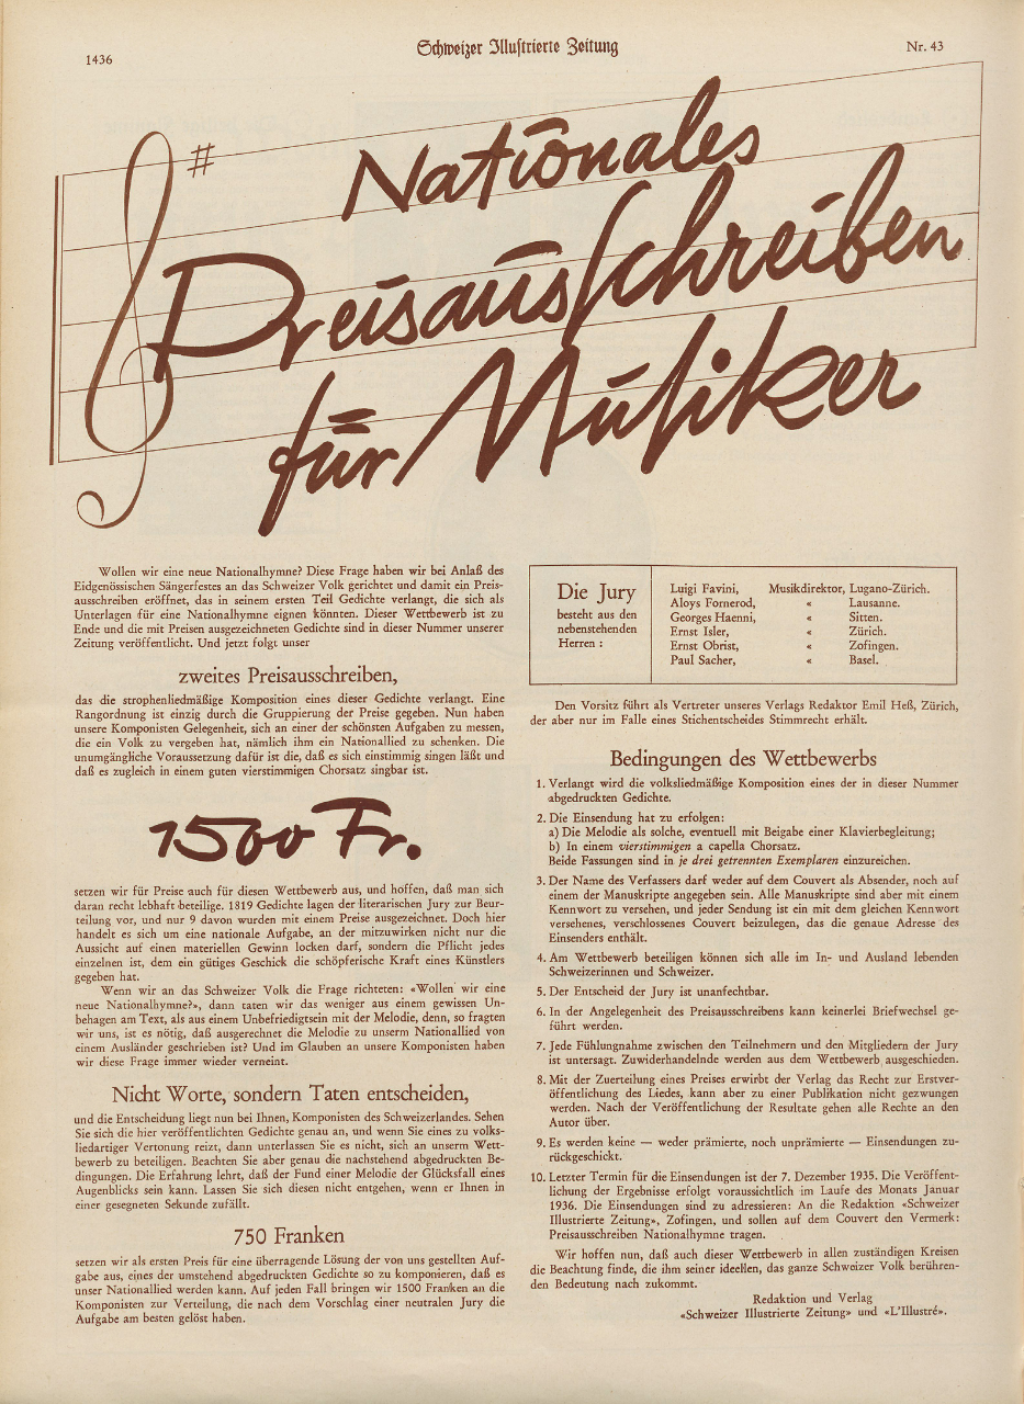 “National Prize Competition for Musicians”, Schweizer Illustrierte Zeitung, No. 43, 23 October 1935